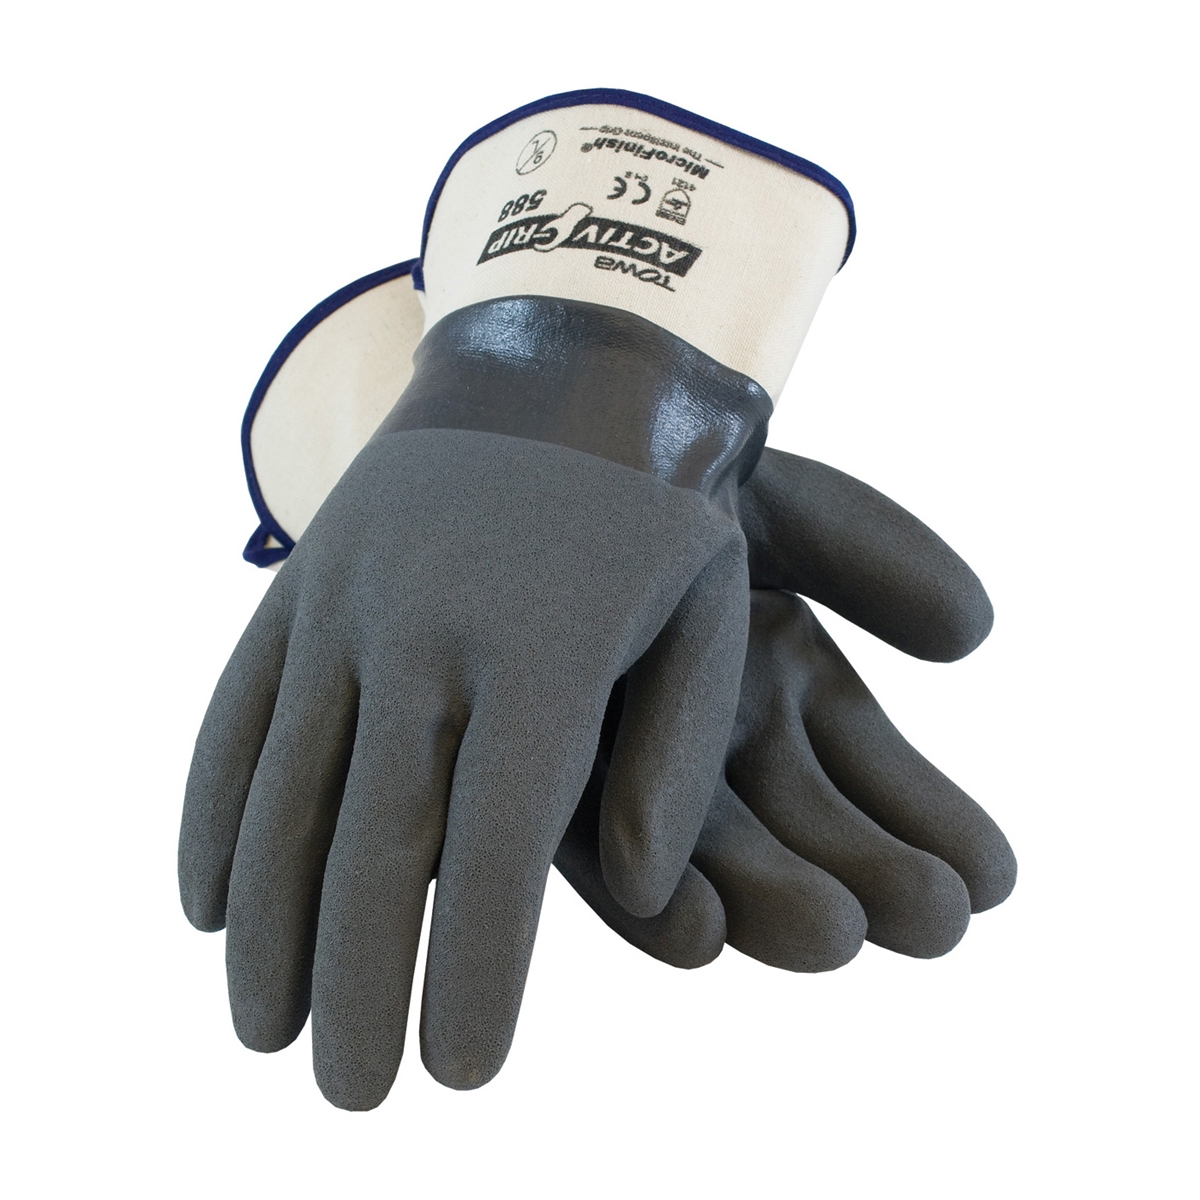 P-Grip Polyurethane Coated Glove, Gray/Gray, 12/pair